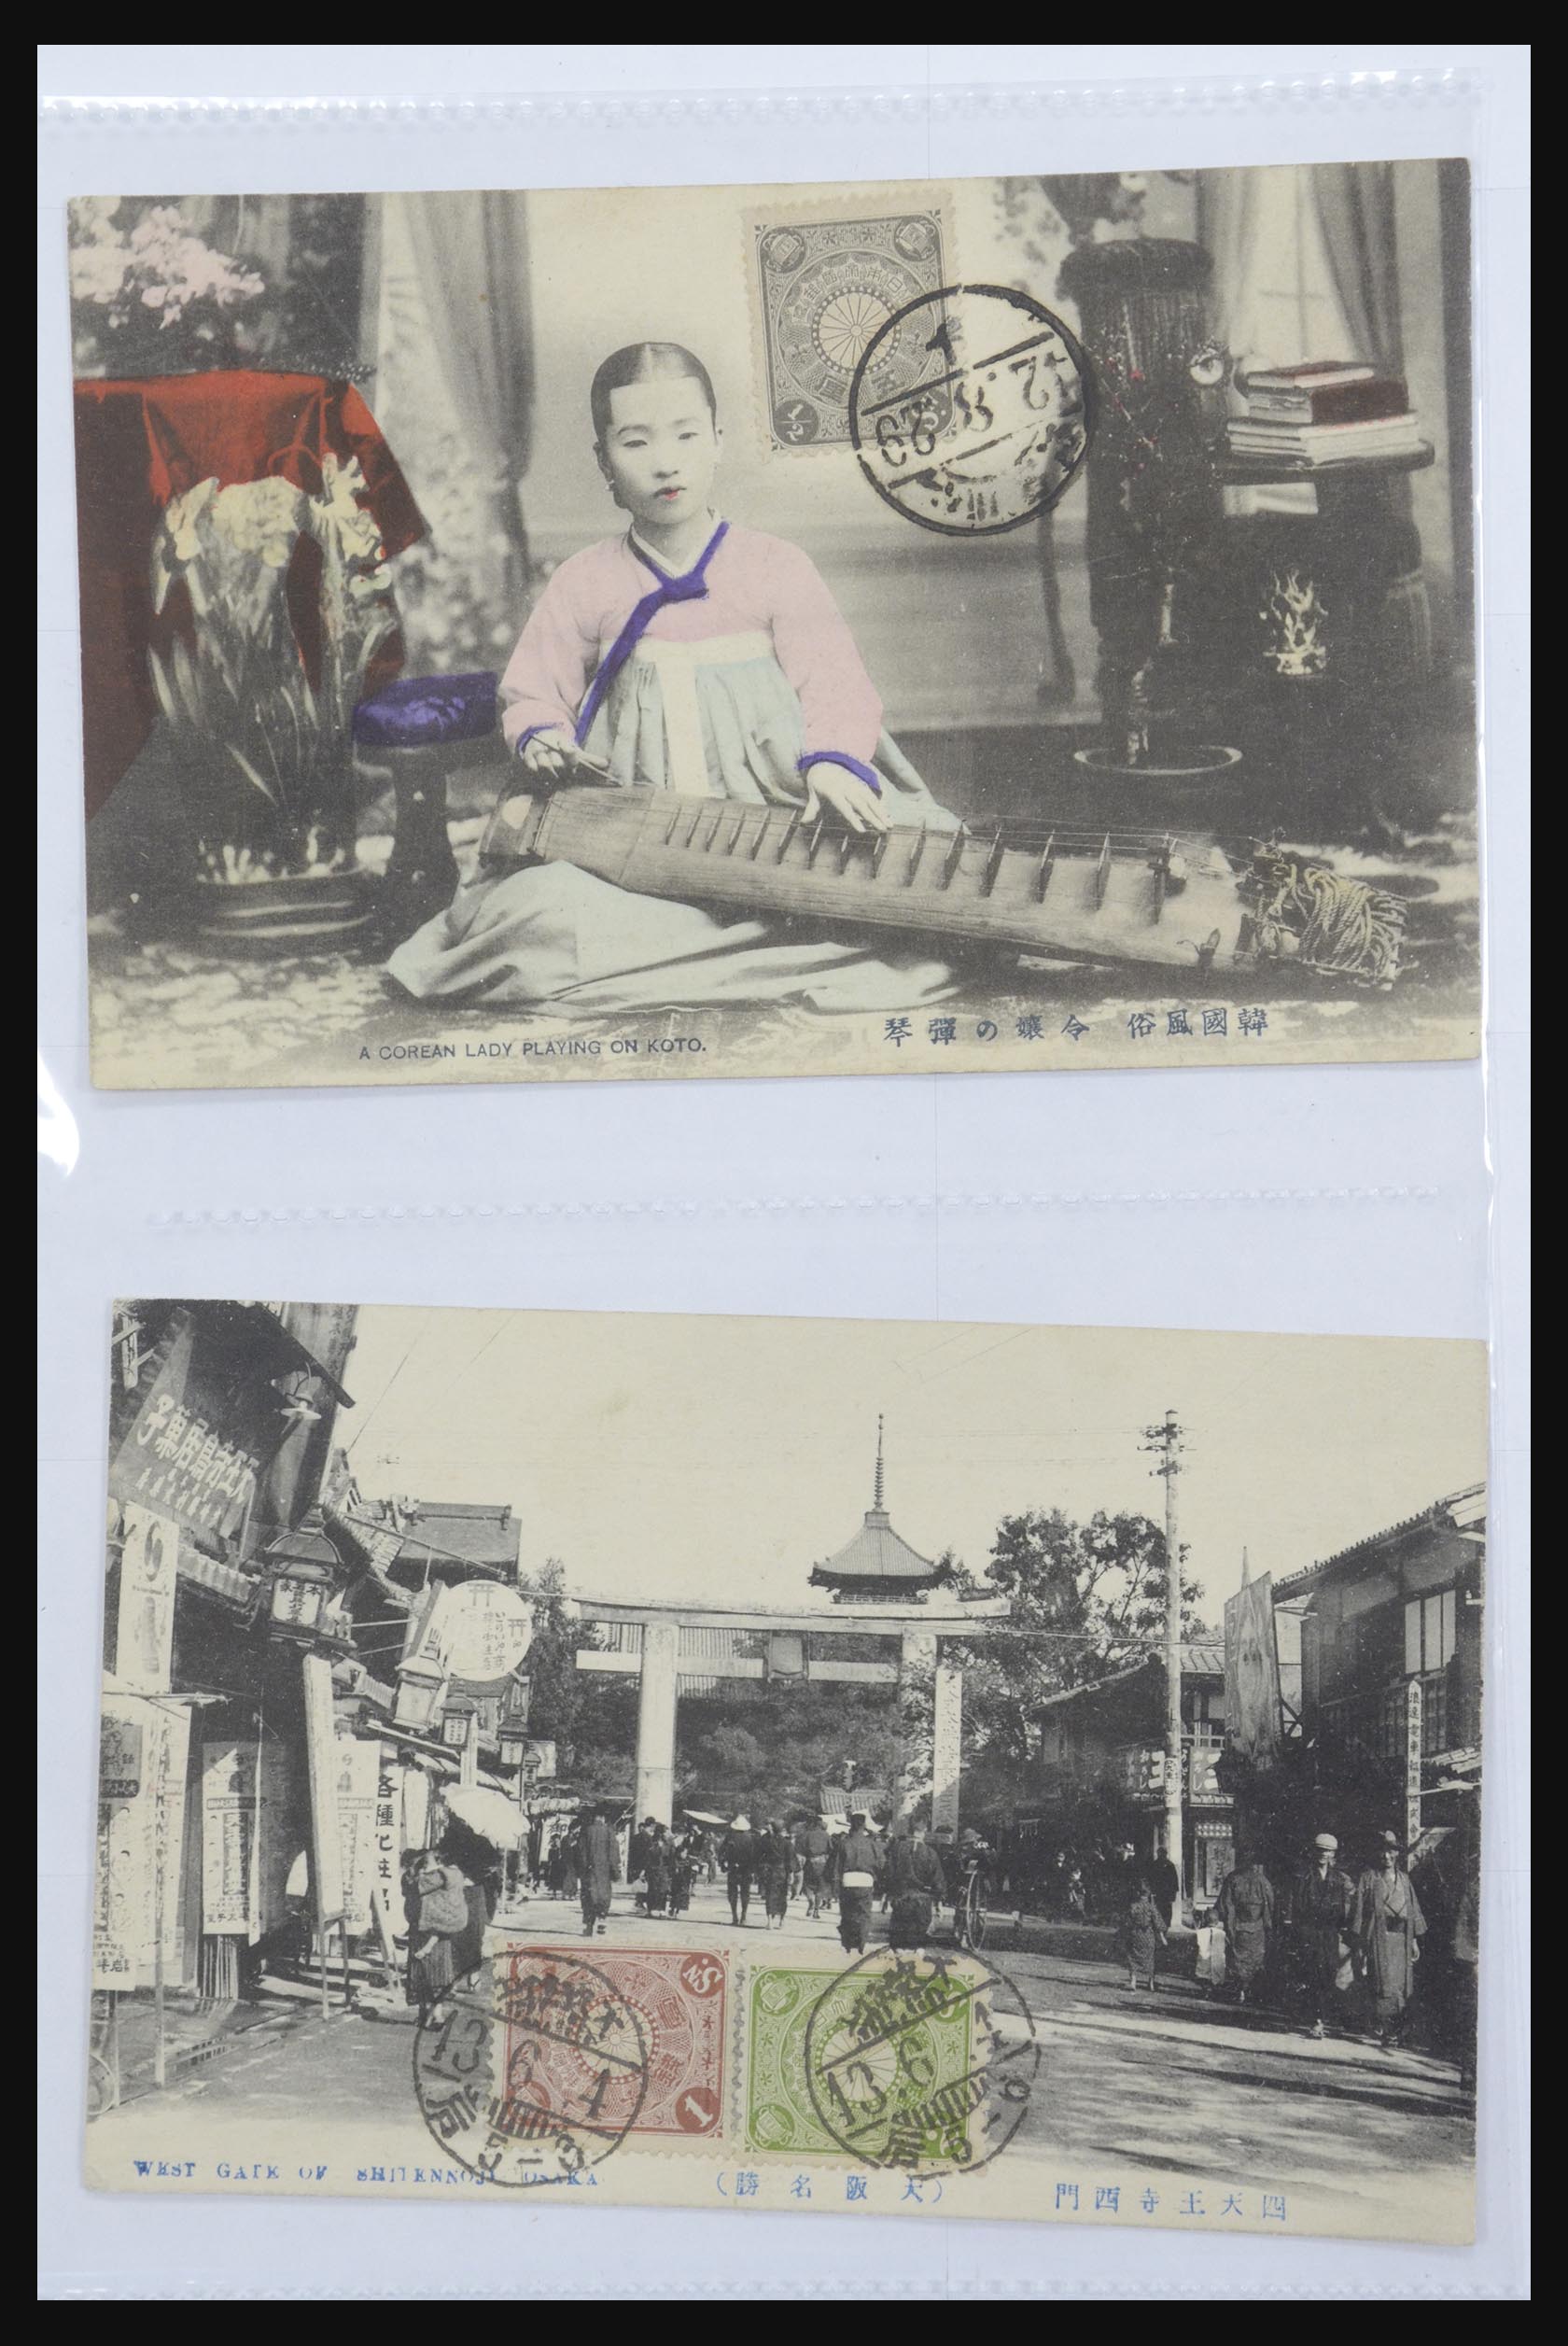 31667 005 - 31667 Japan picture postcards 1900-1920.